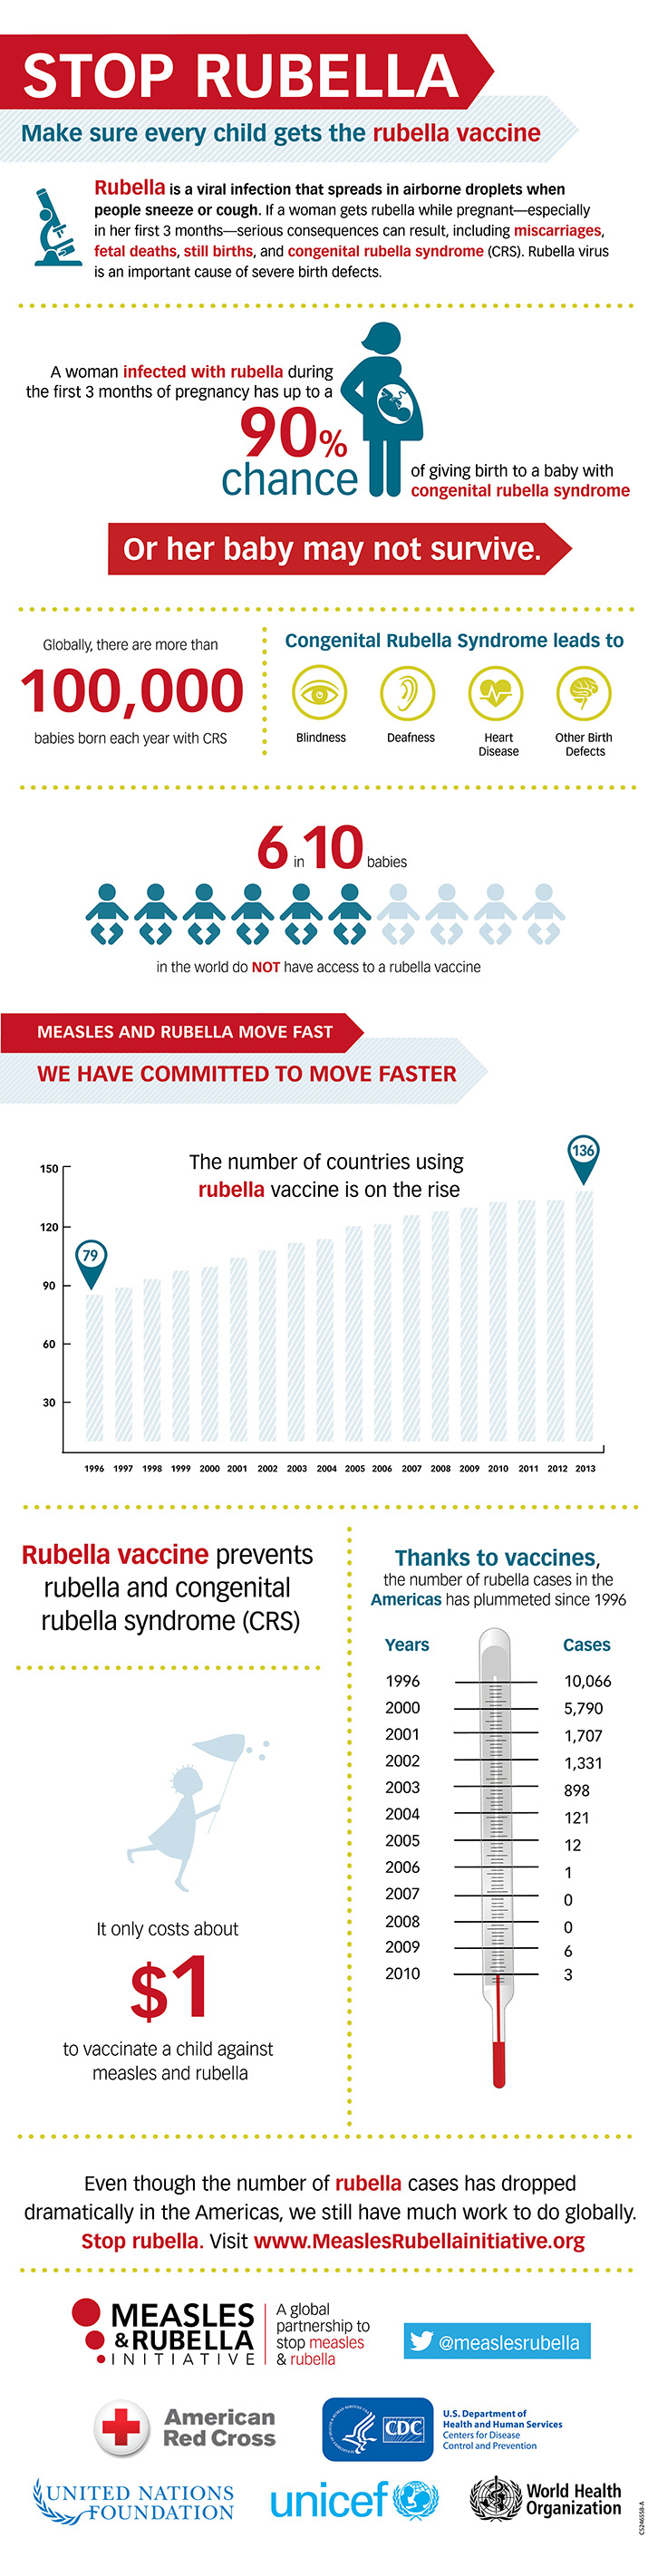 Stop-Rubella-Infographic-715